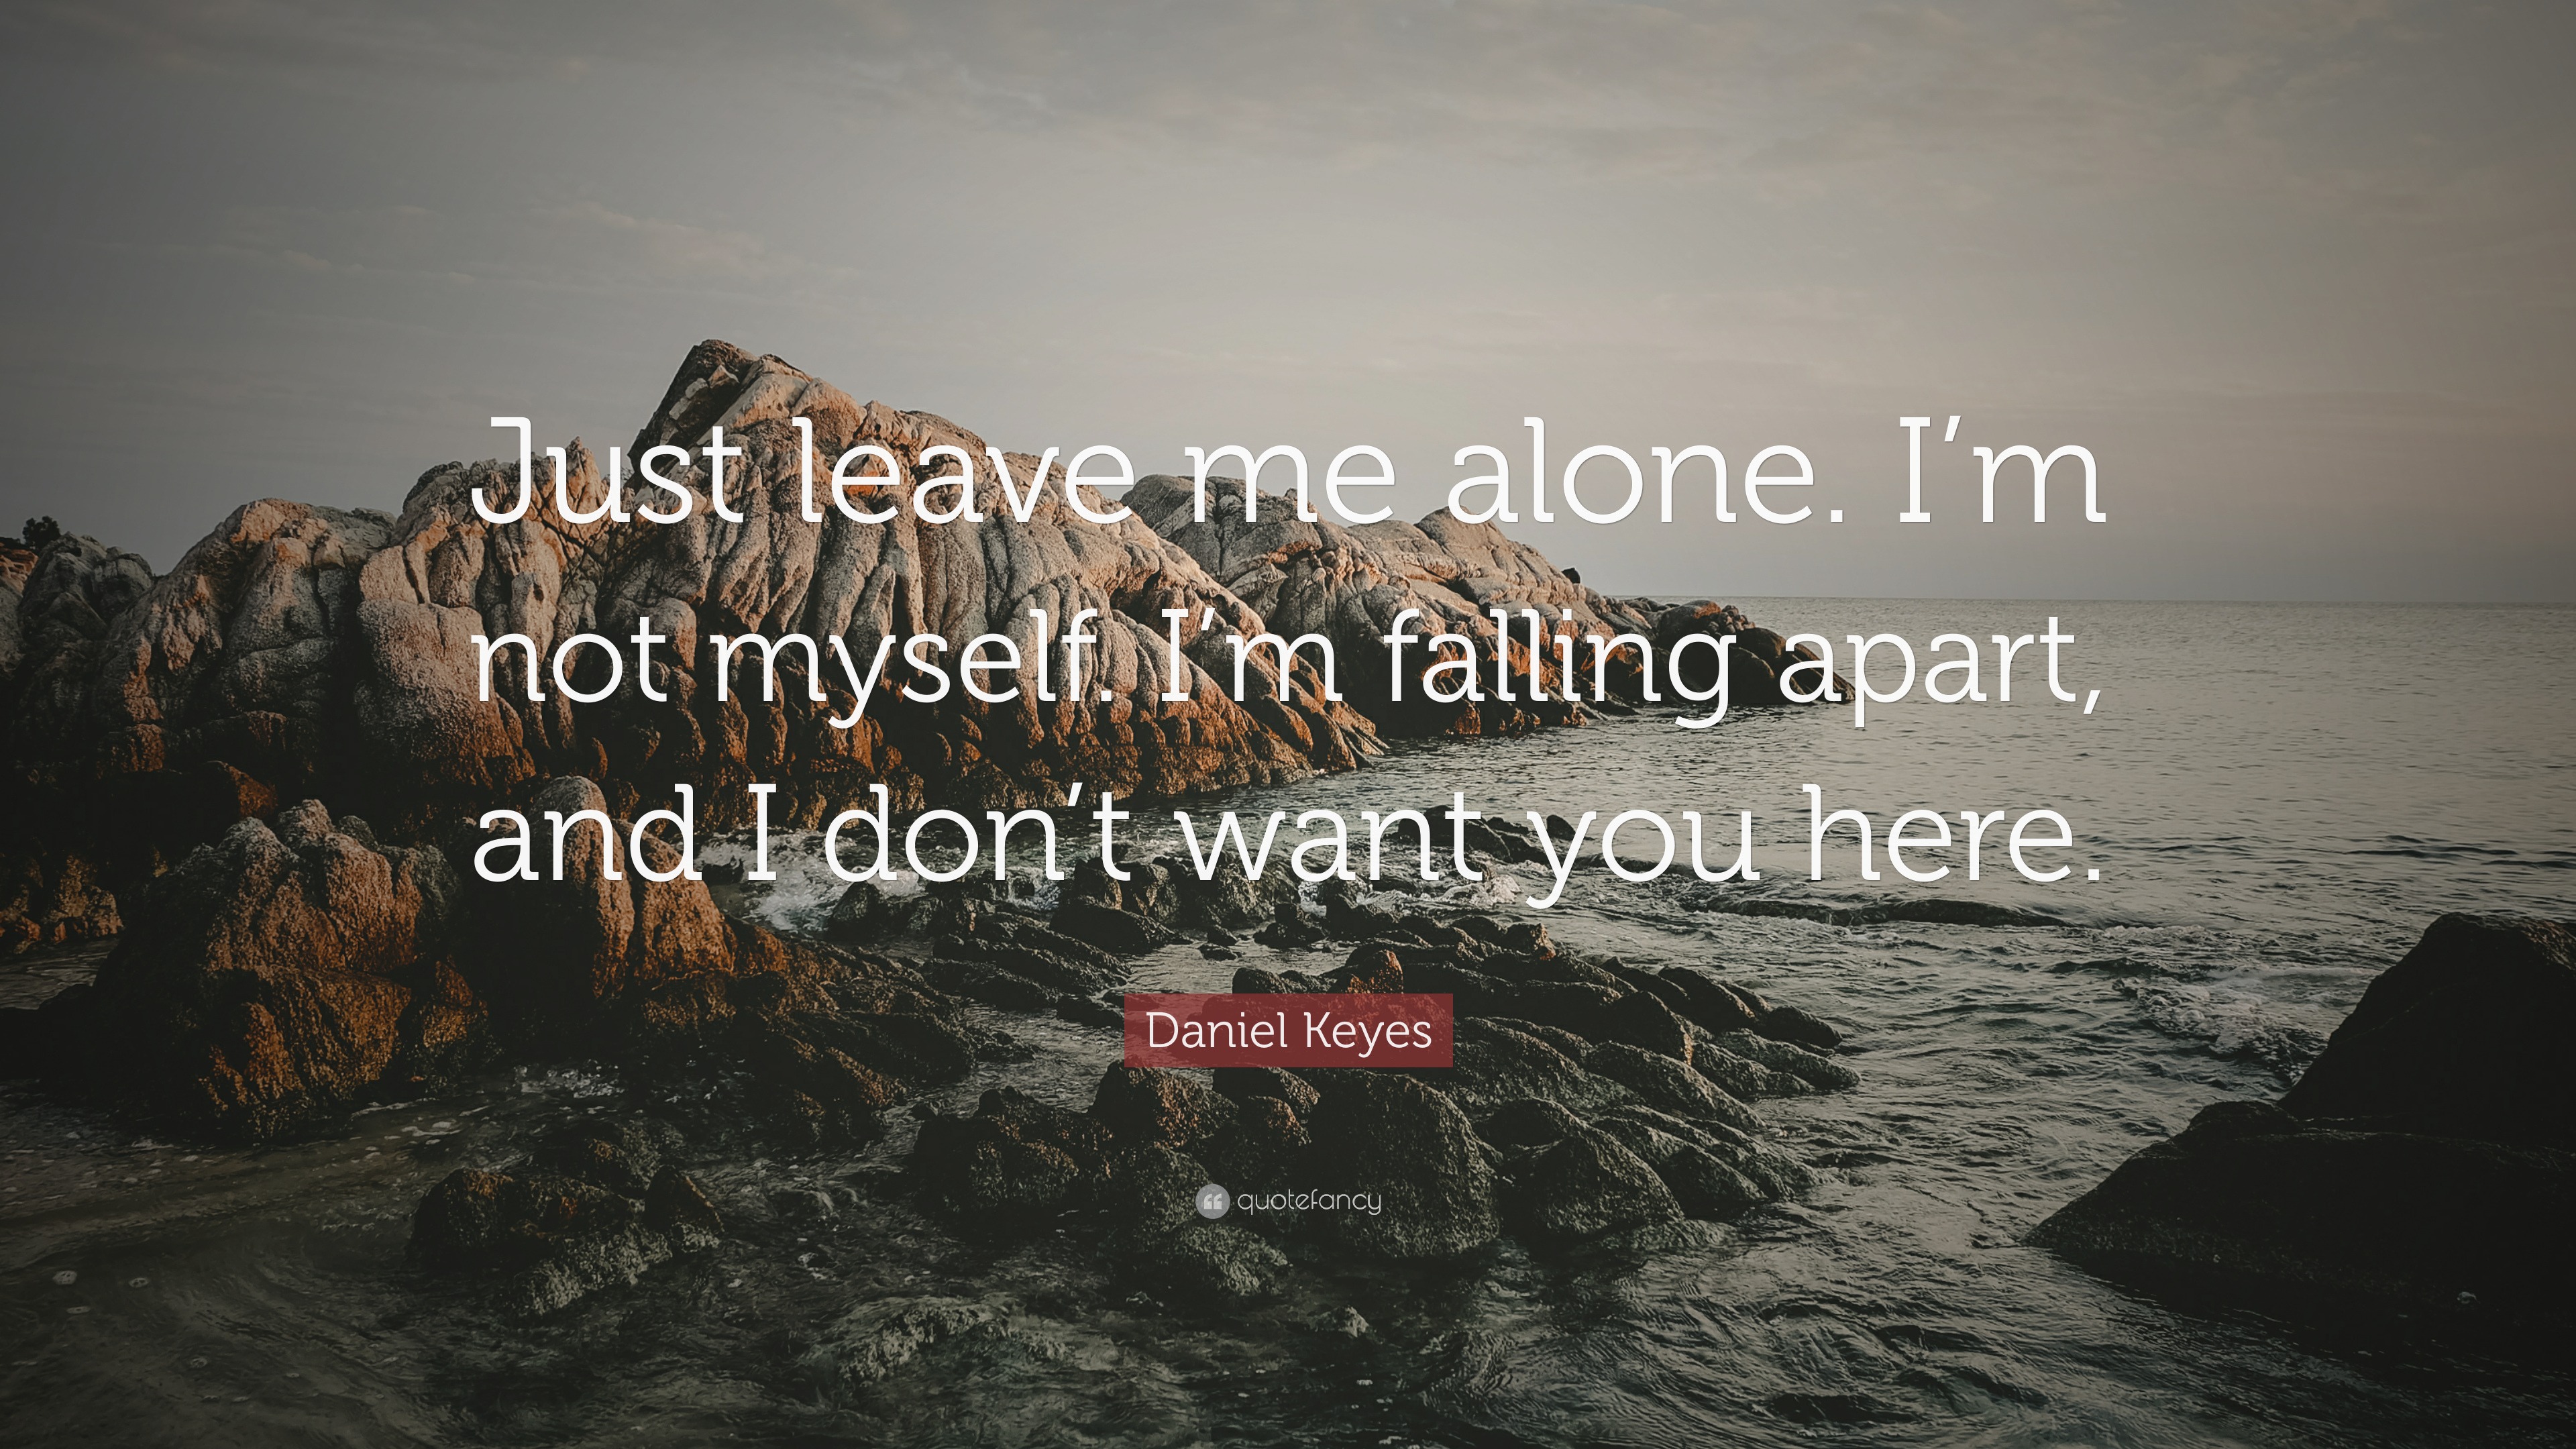 Daniel Keyes Quote “Just leave me alone. I’m not myself. I’m falling